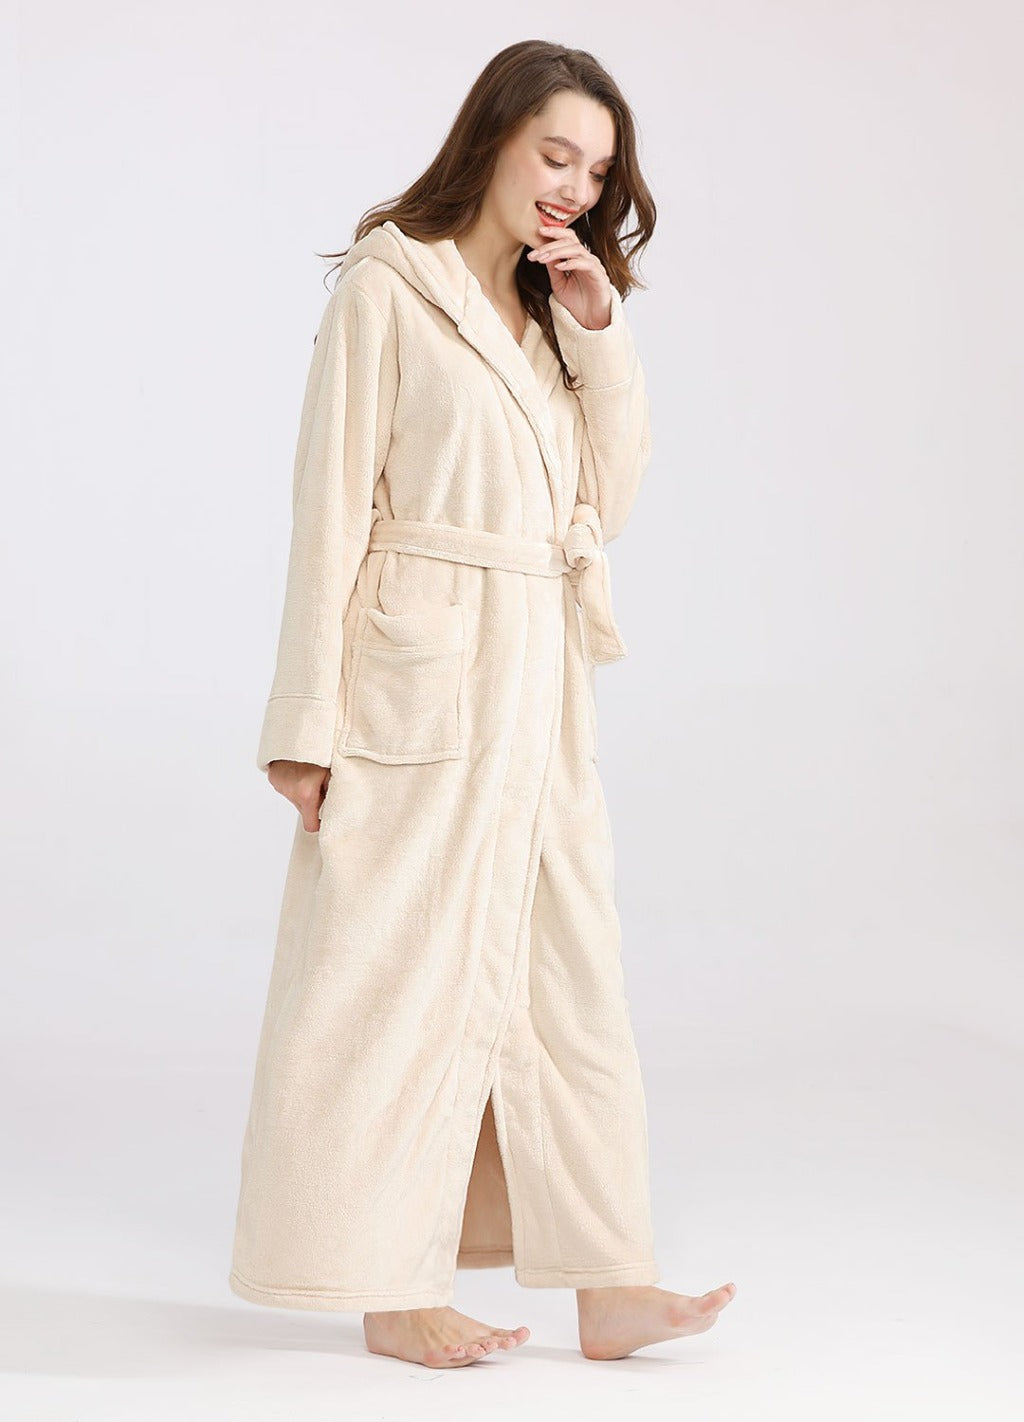 Artfasion Fluffy Plush Grey Dressing Gown Bathrobe with Hood and Wide